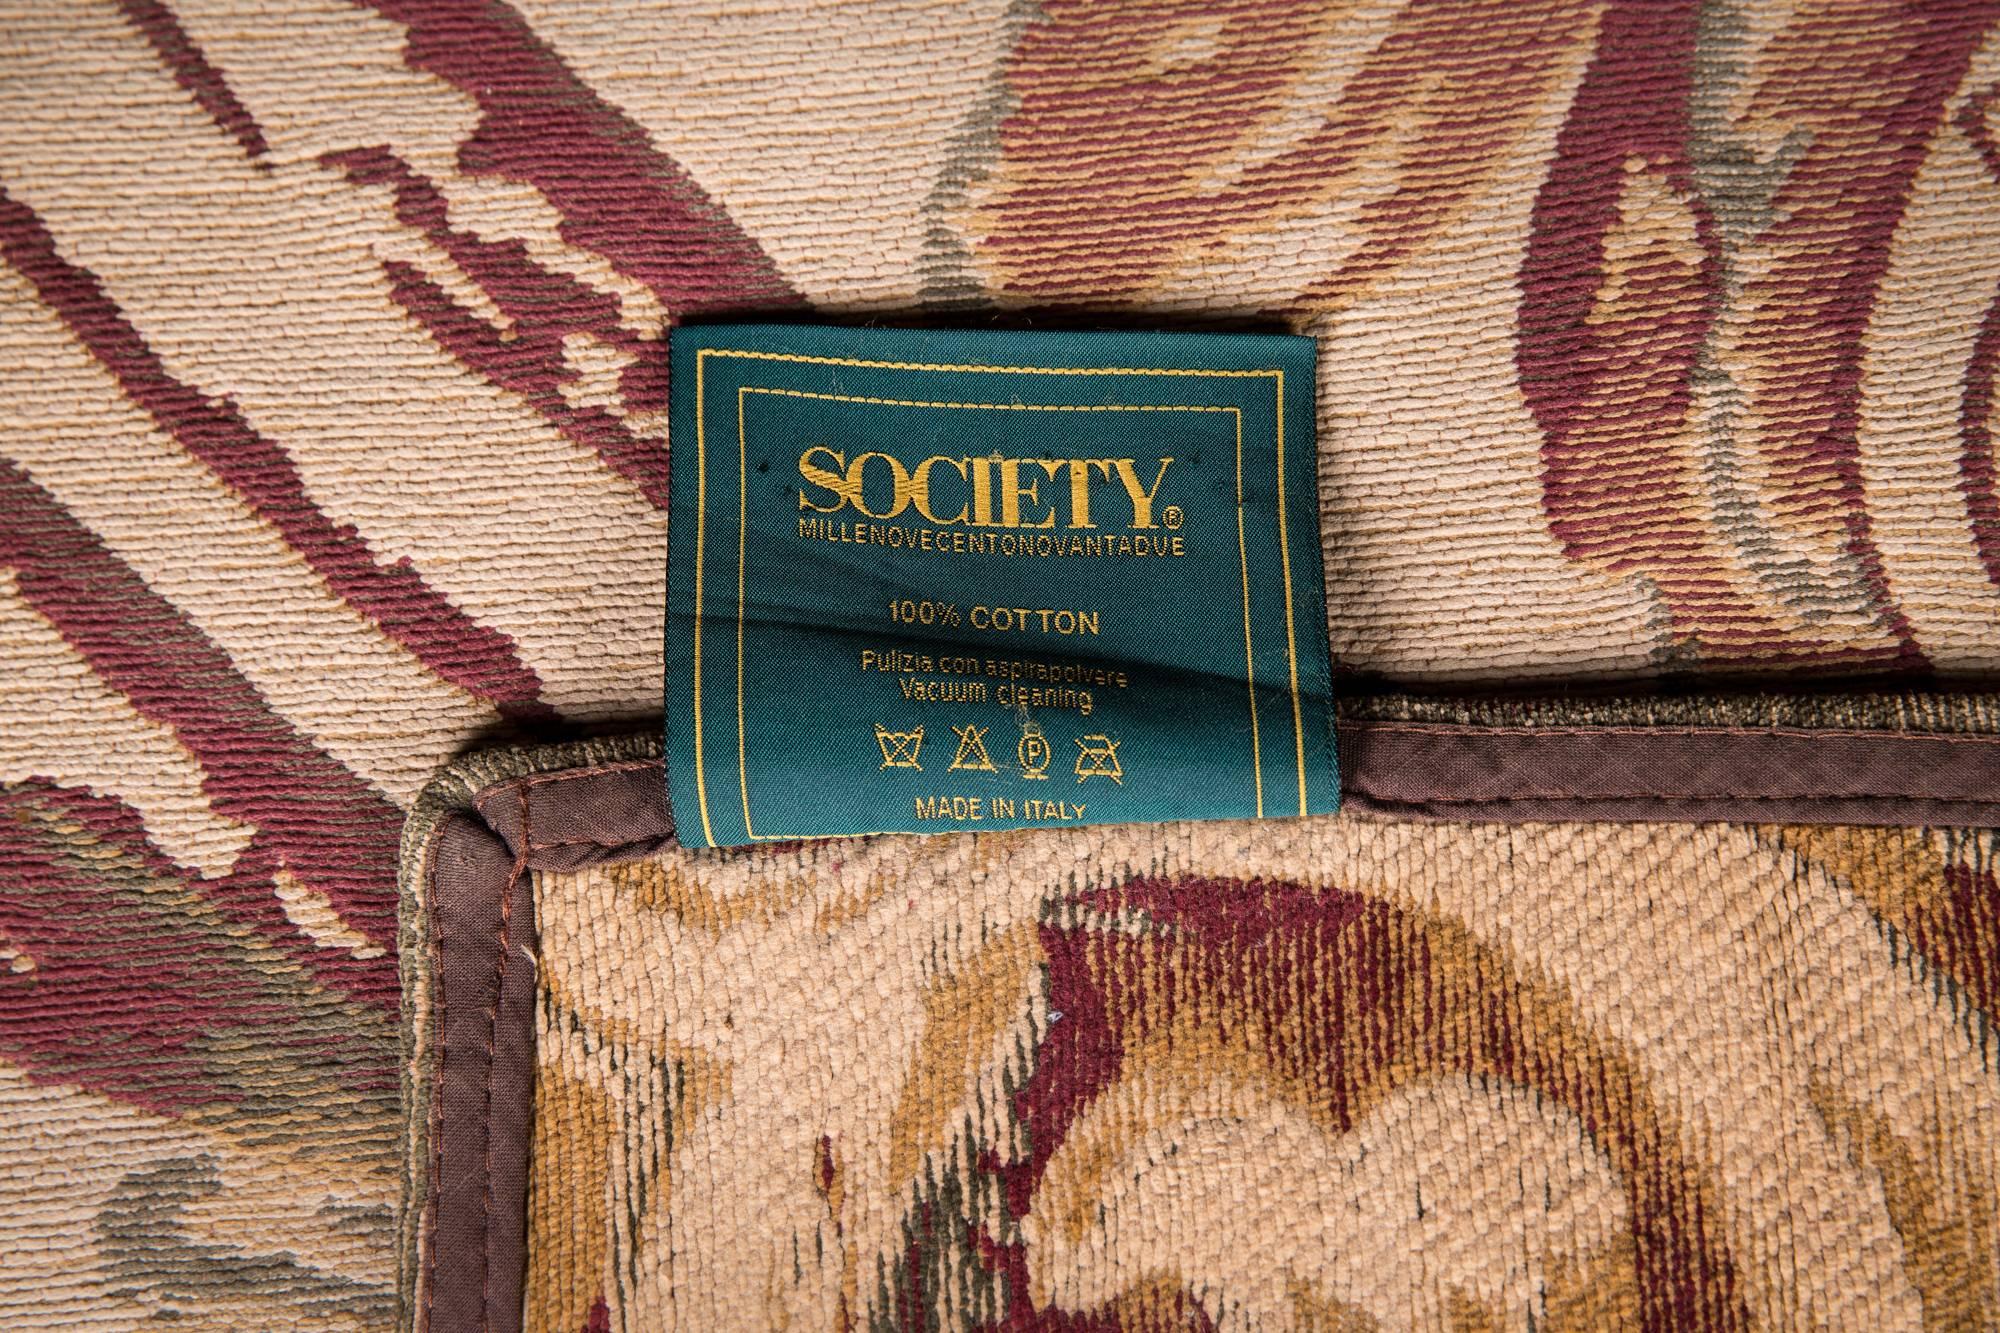 20th Century Exclusive Italian Carpet by Society Collezione Tappeti, 170cm x 400cm